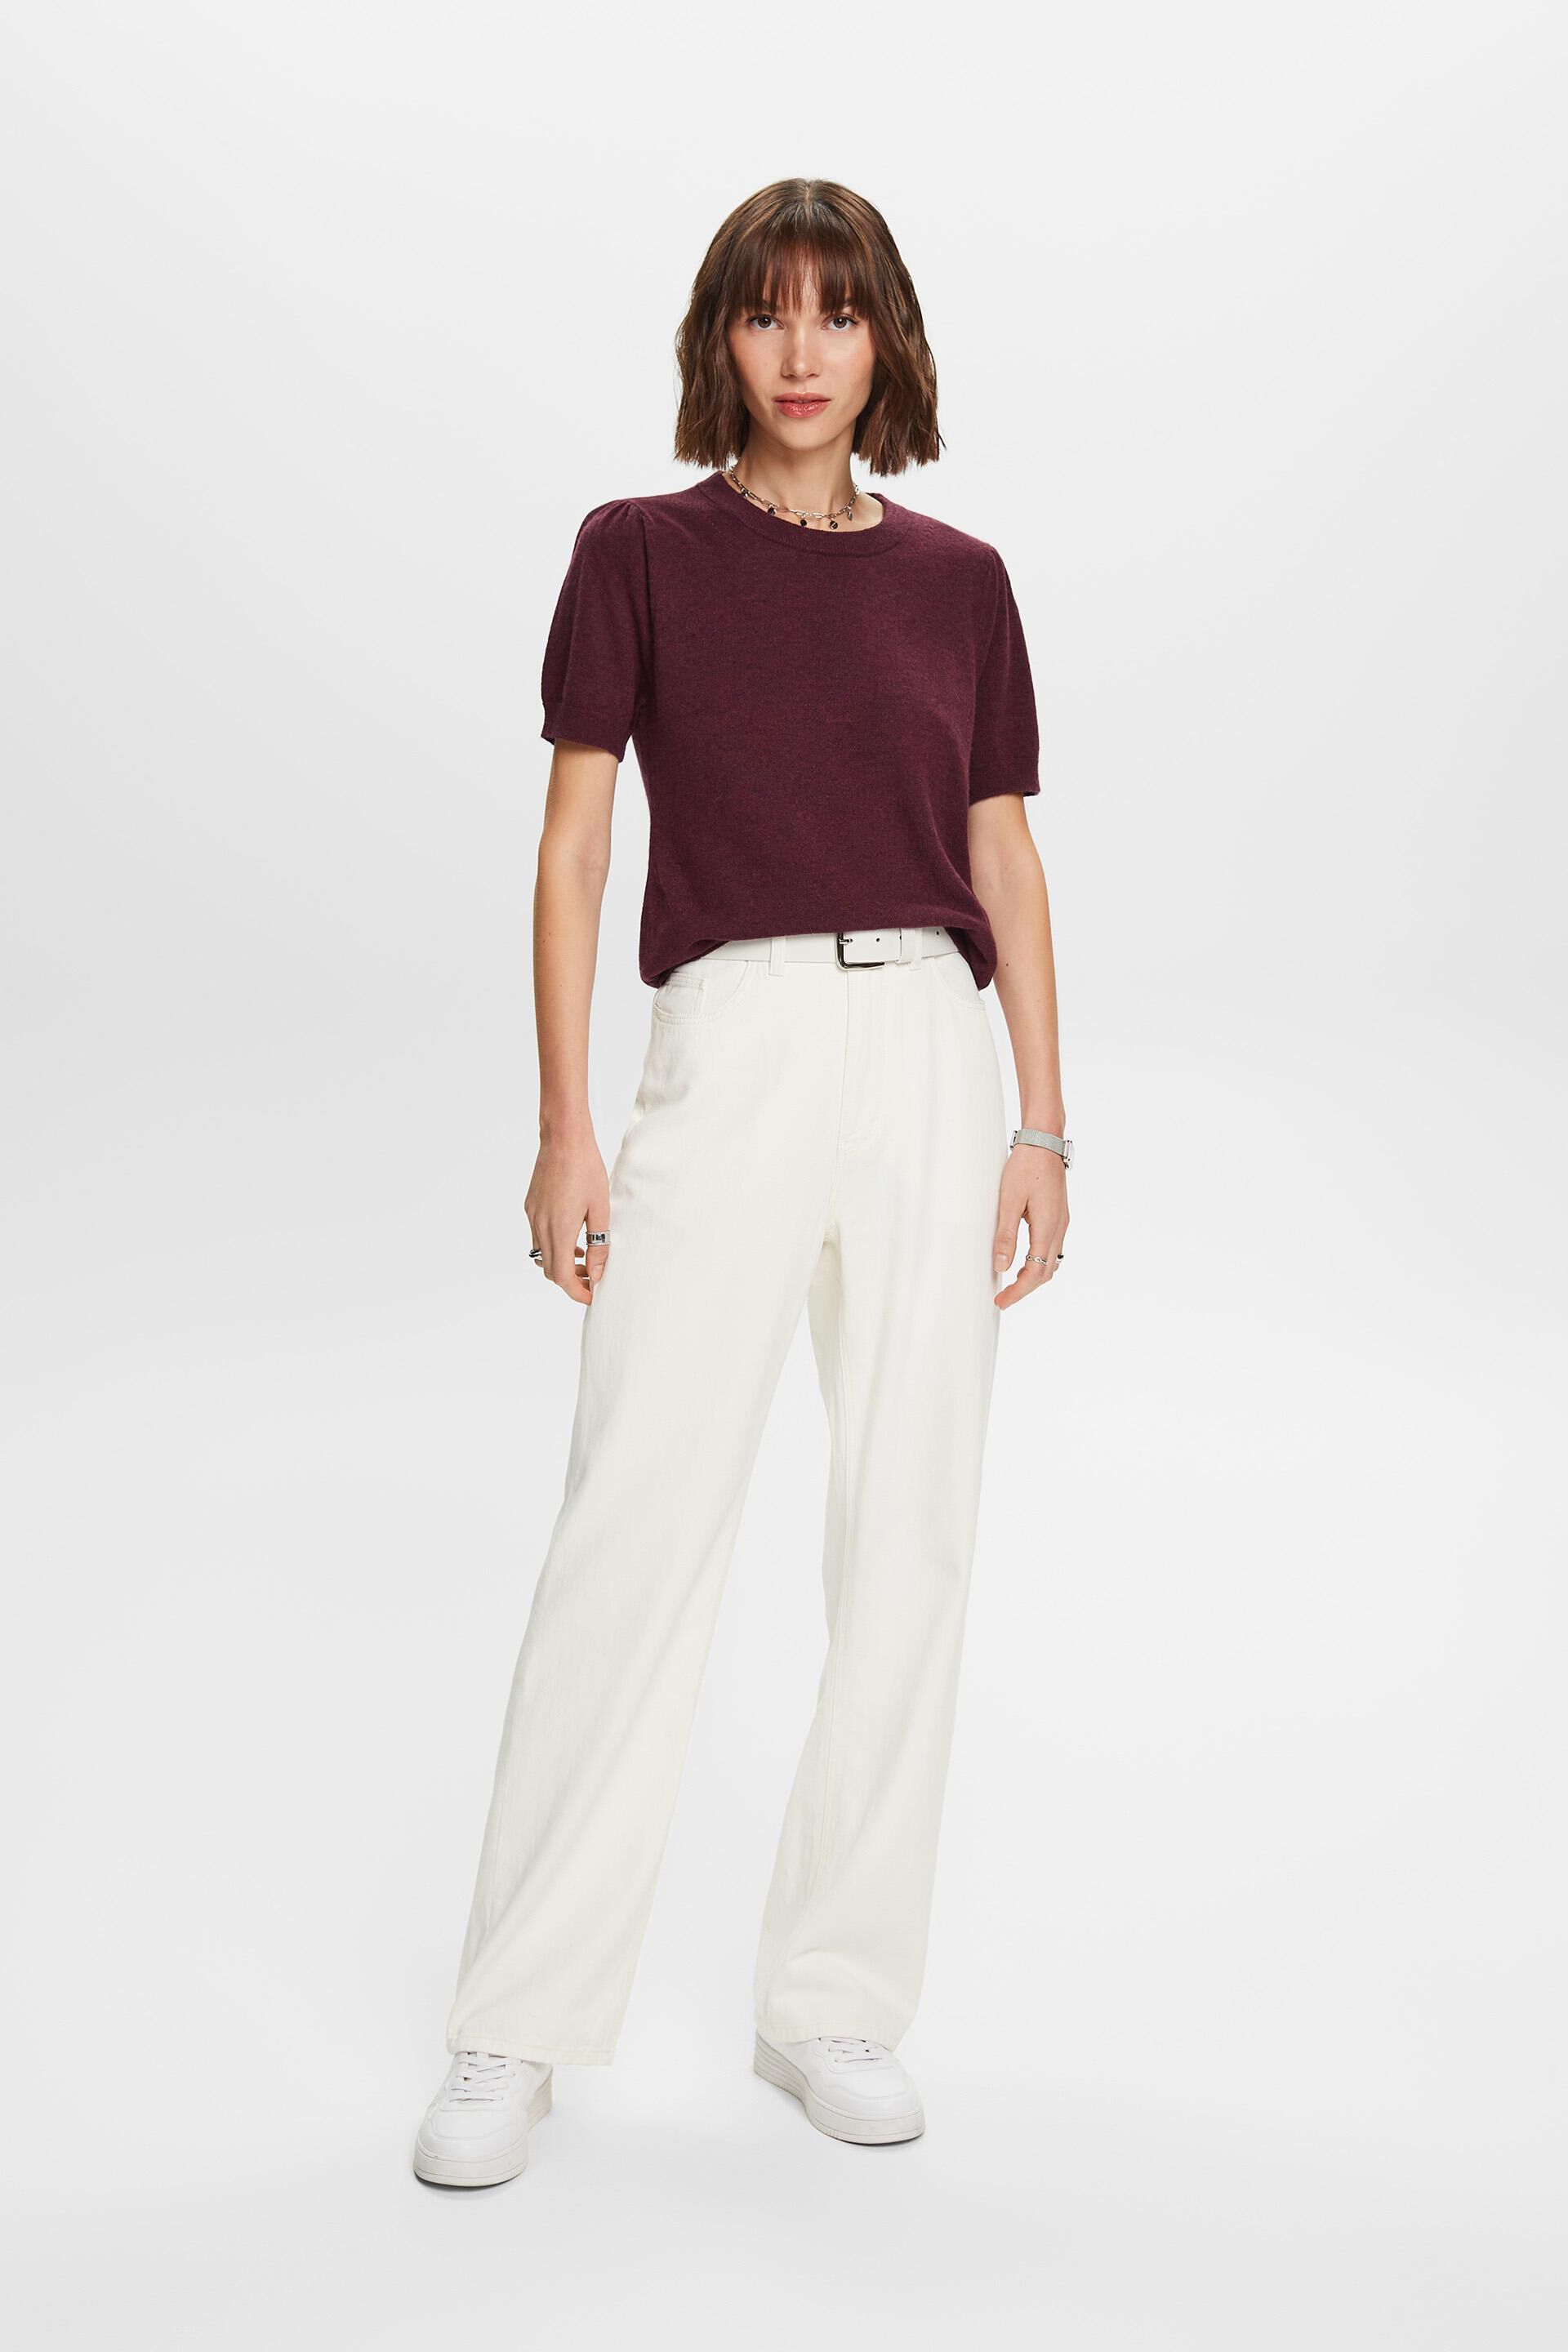 Esprit With sleeve short jumper cashmere: